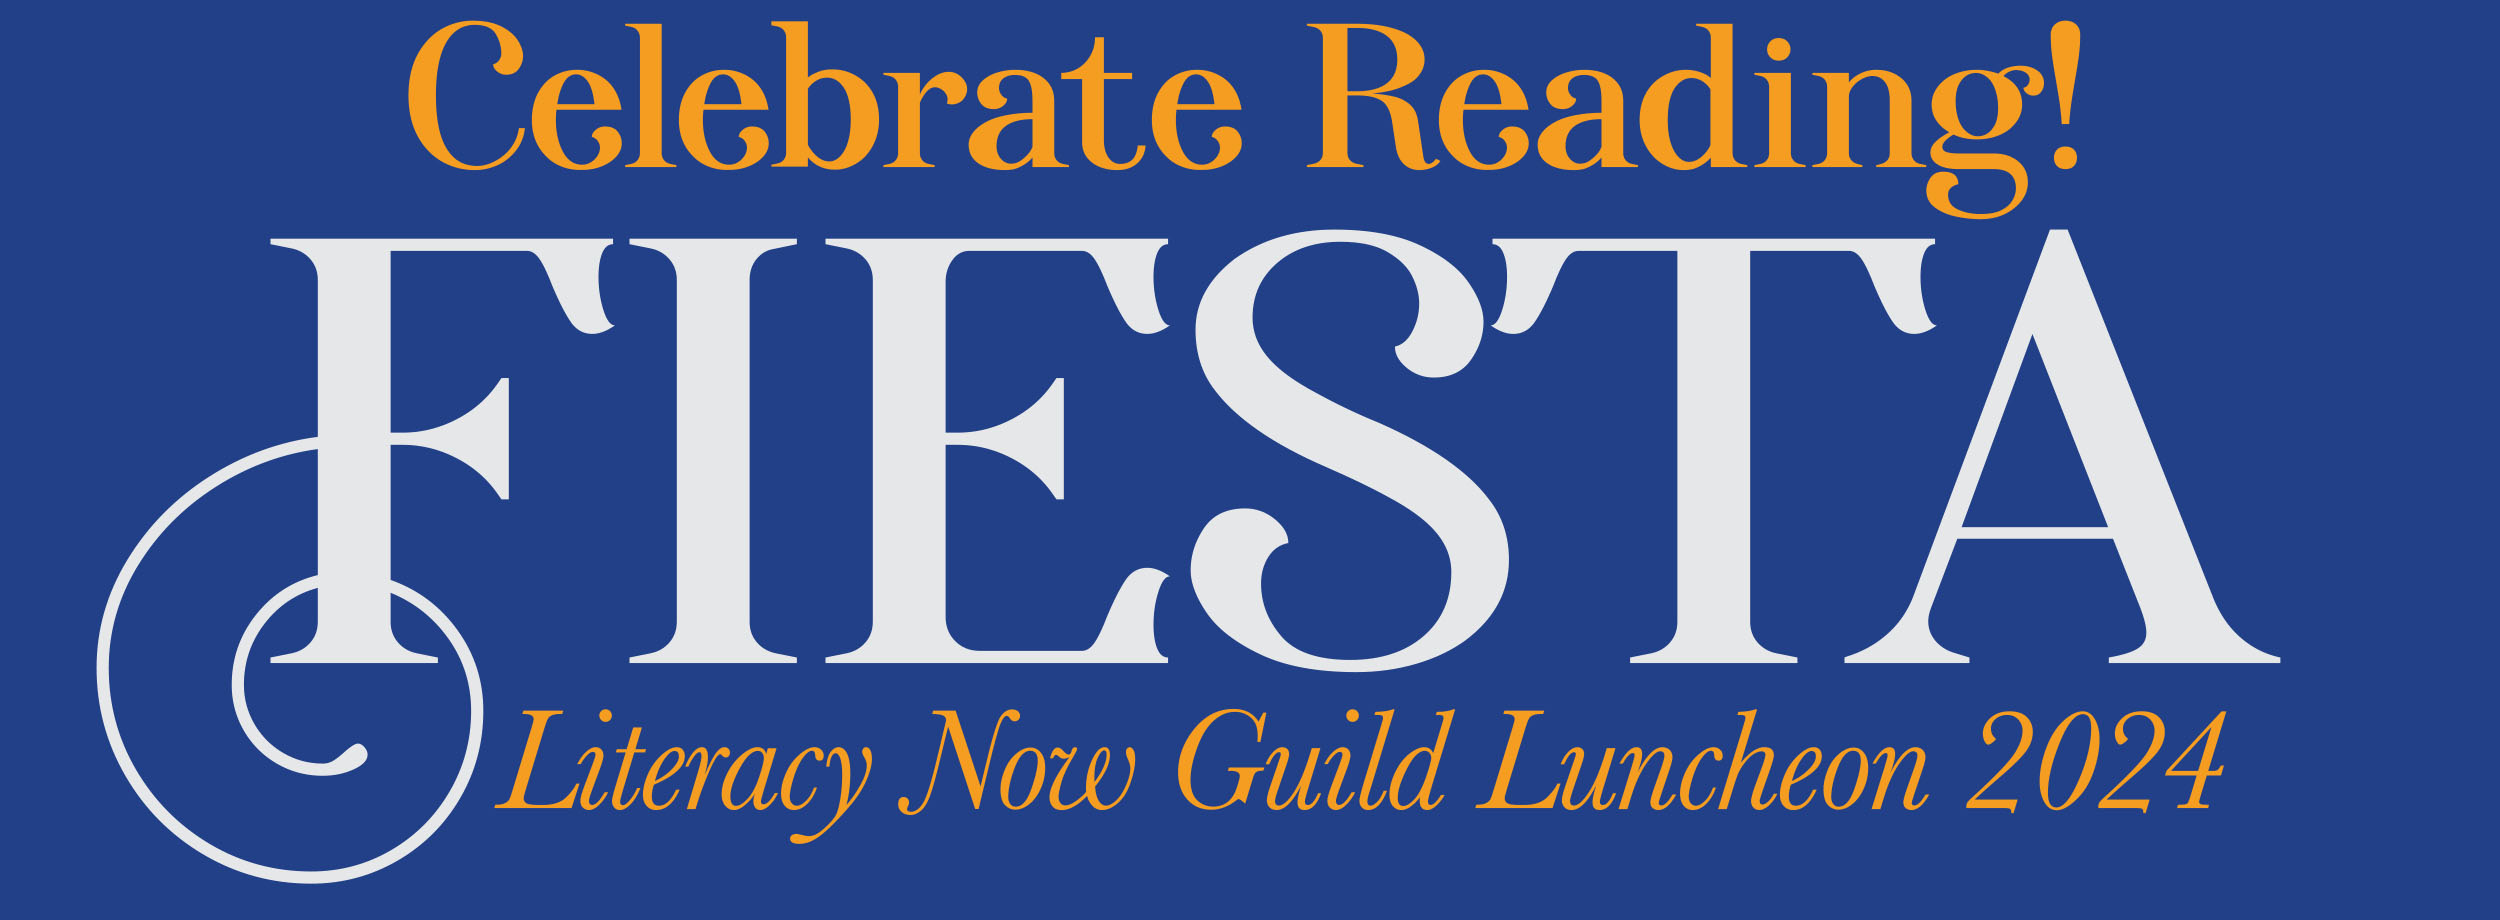 Celebrate Reading! Fiesta Guild Header Image